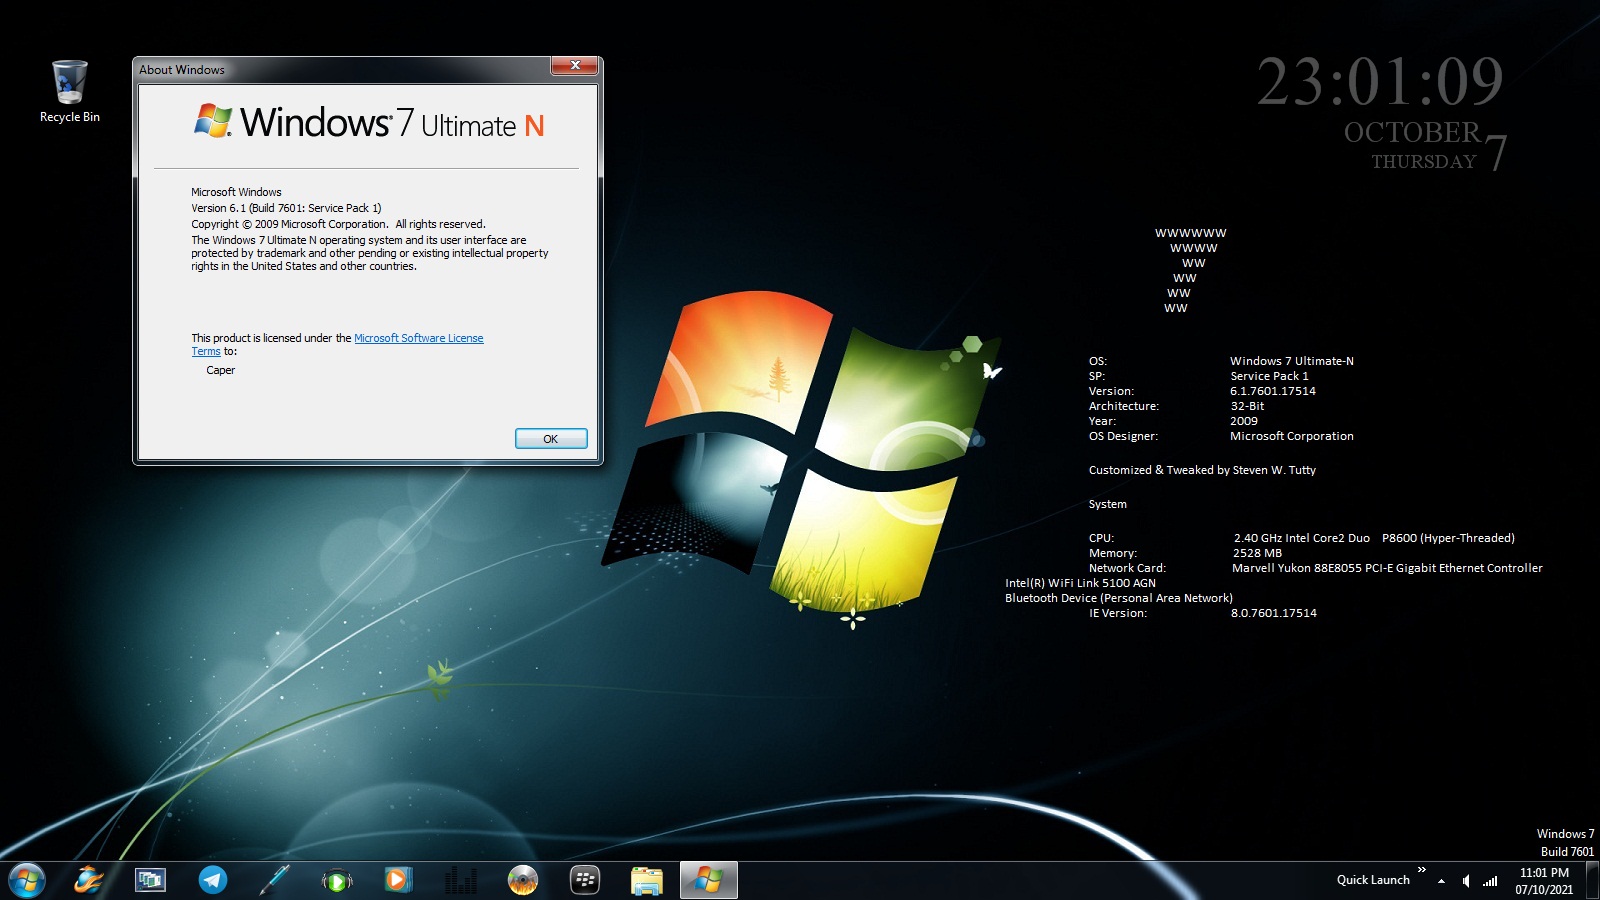 Windows 7 Ultimate Activation Key + Crack Free Download 2022